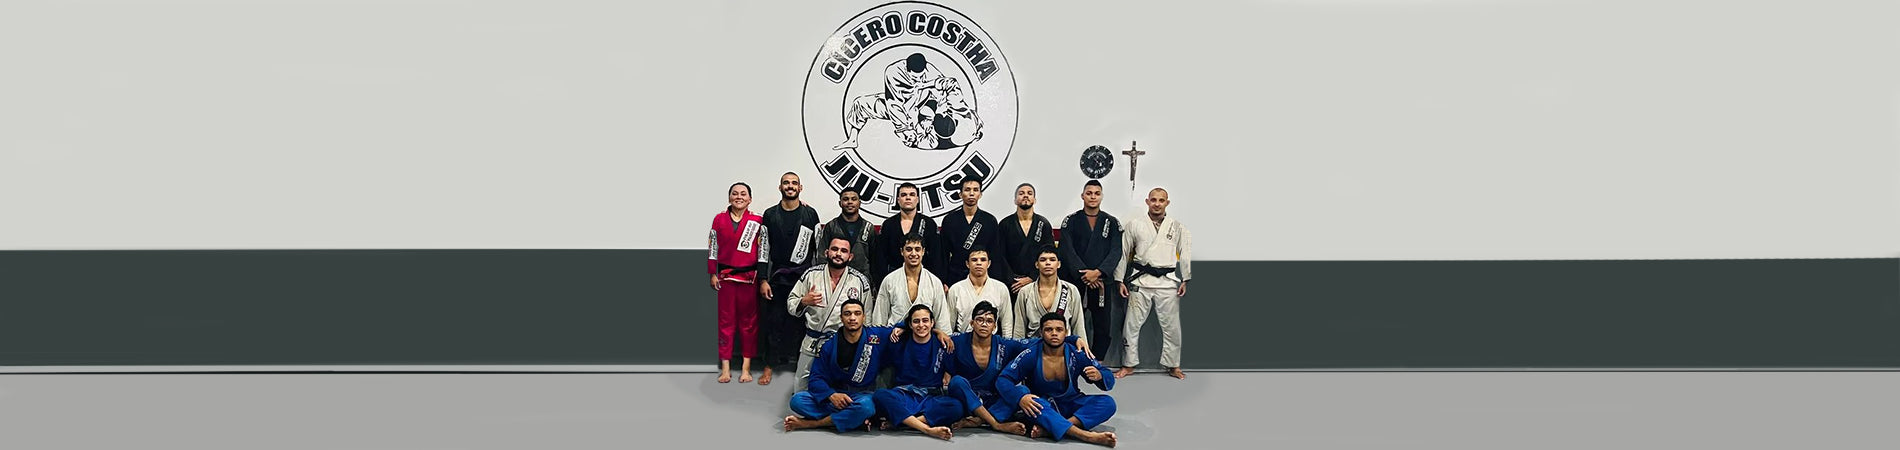 Cicero Costha Internacional Jiu-Jitsu Schools Legacy And History